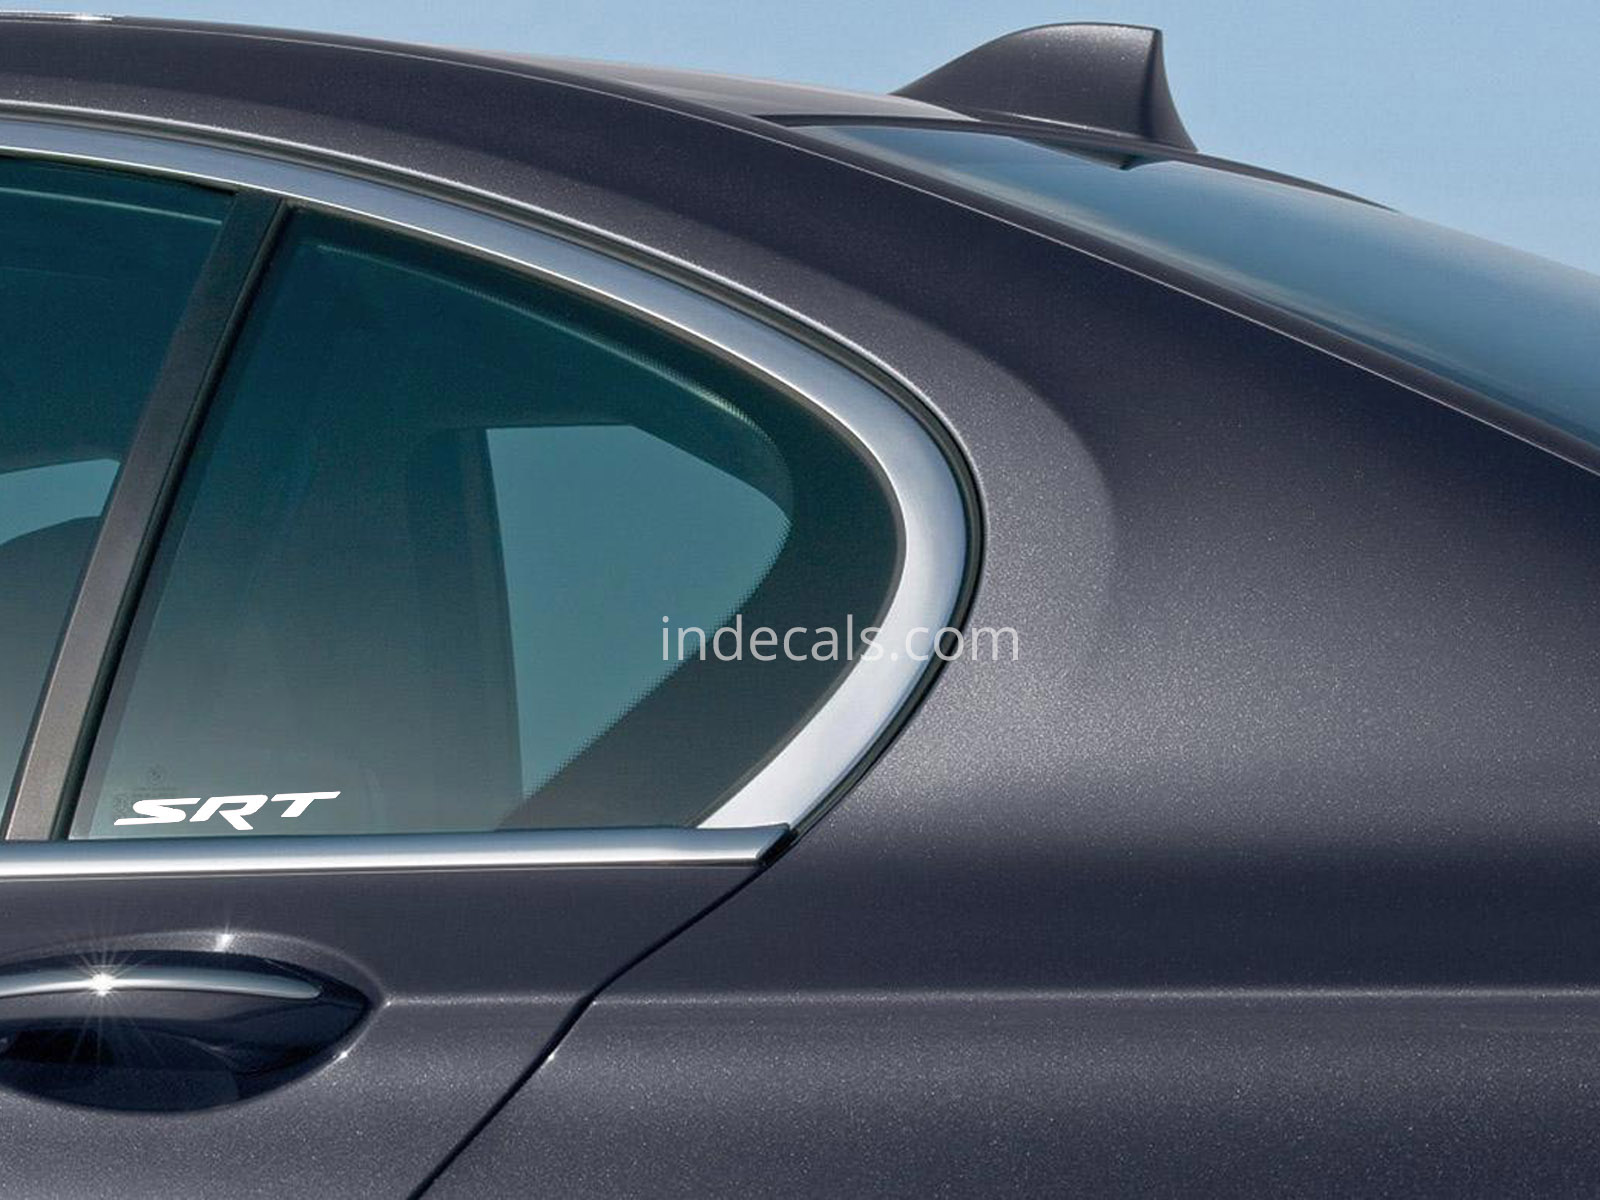 3 x Dodge SRT Stickers for Rear Window - White